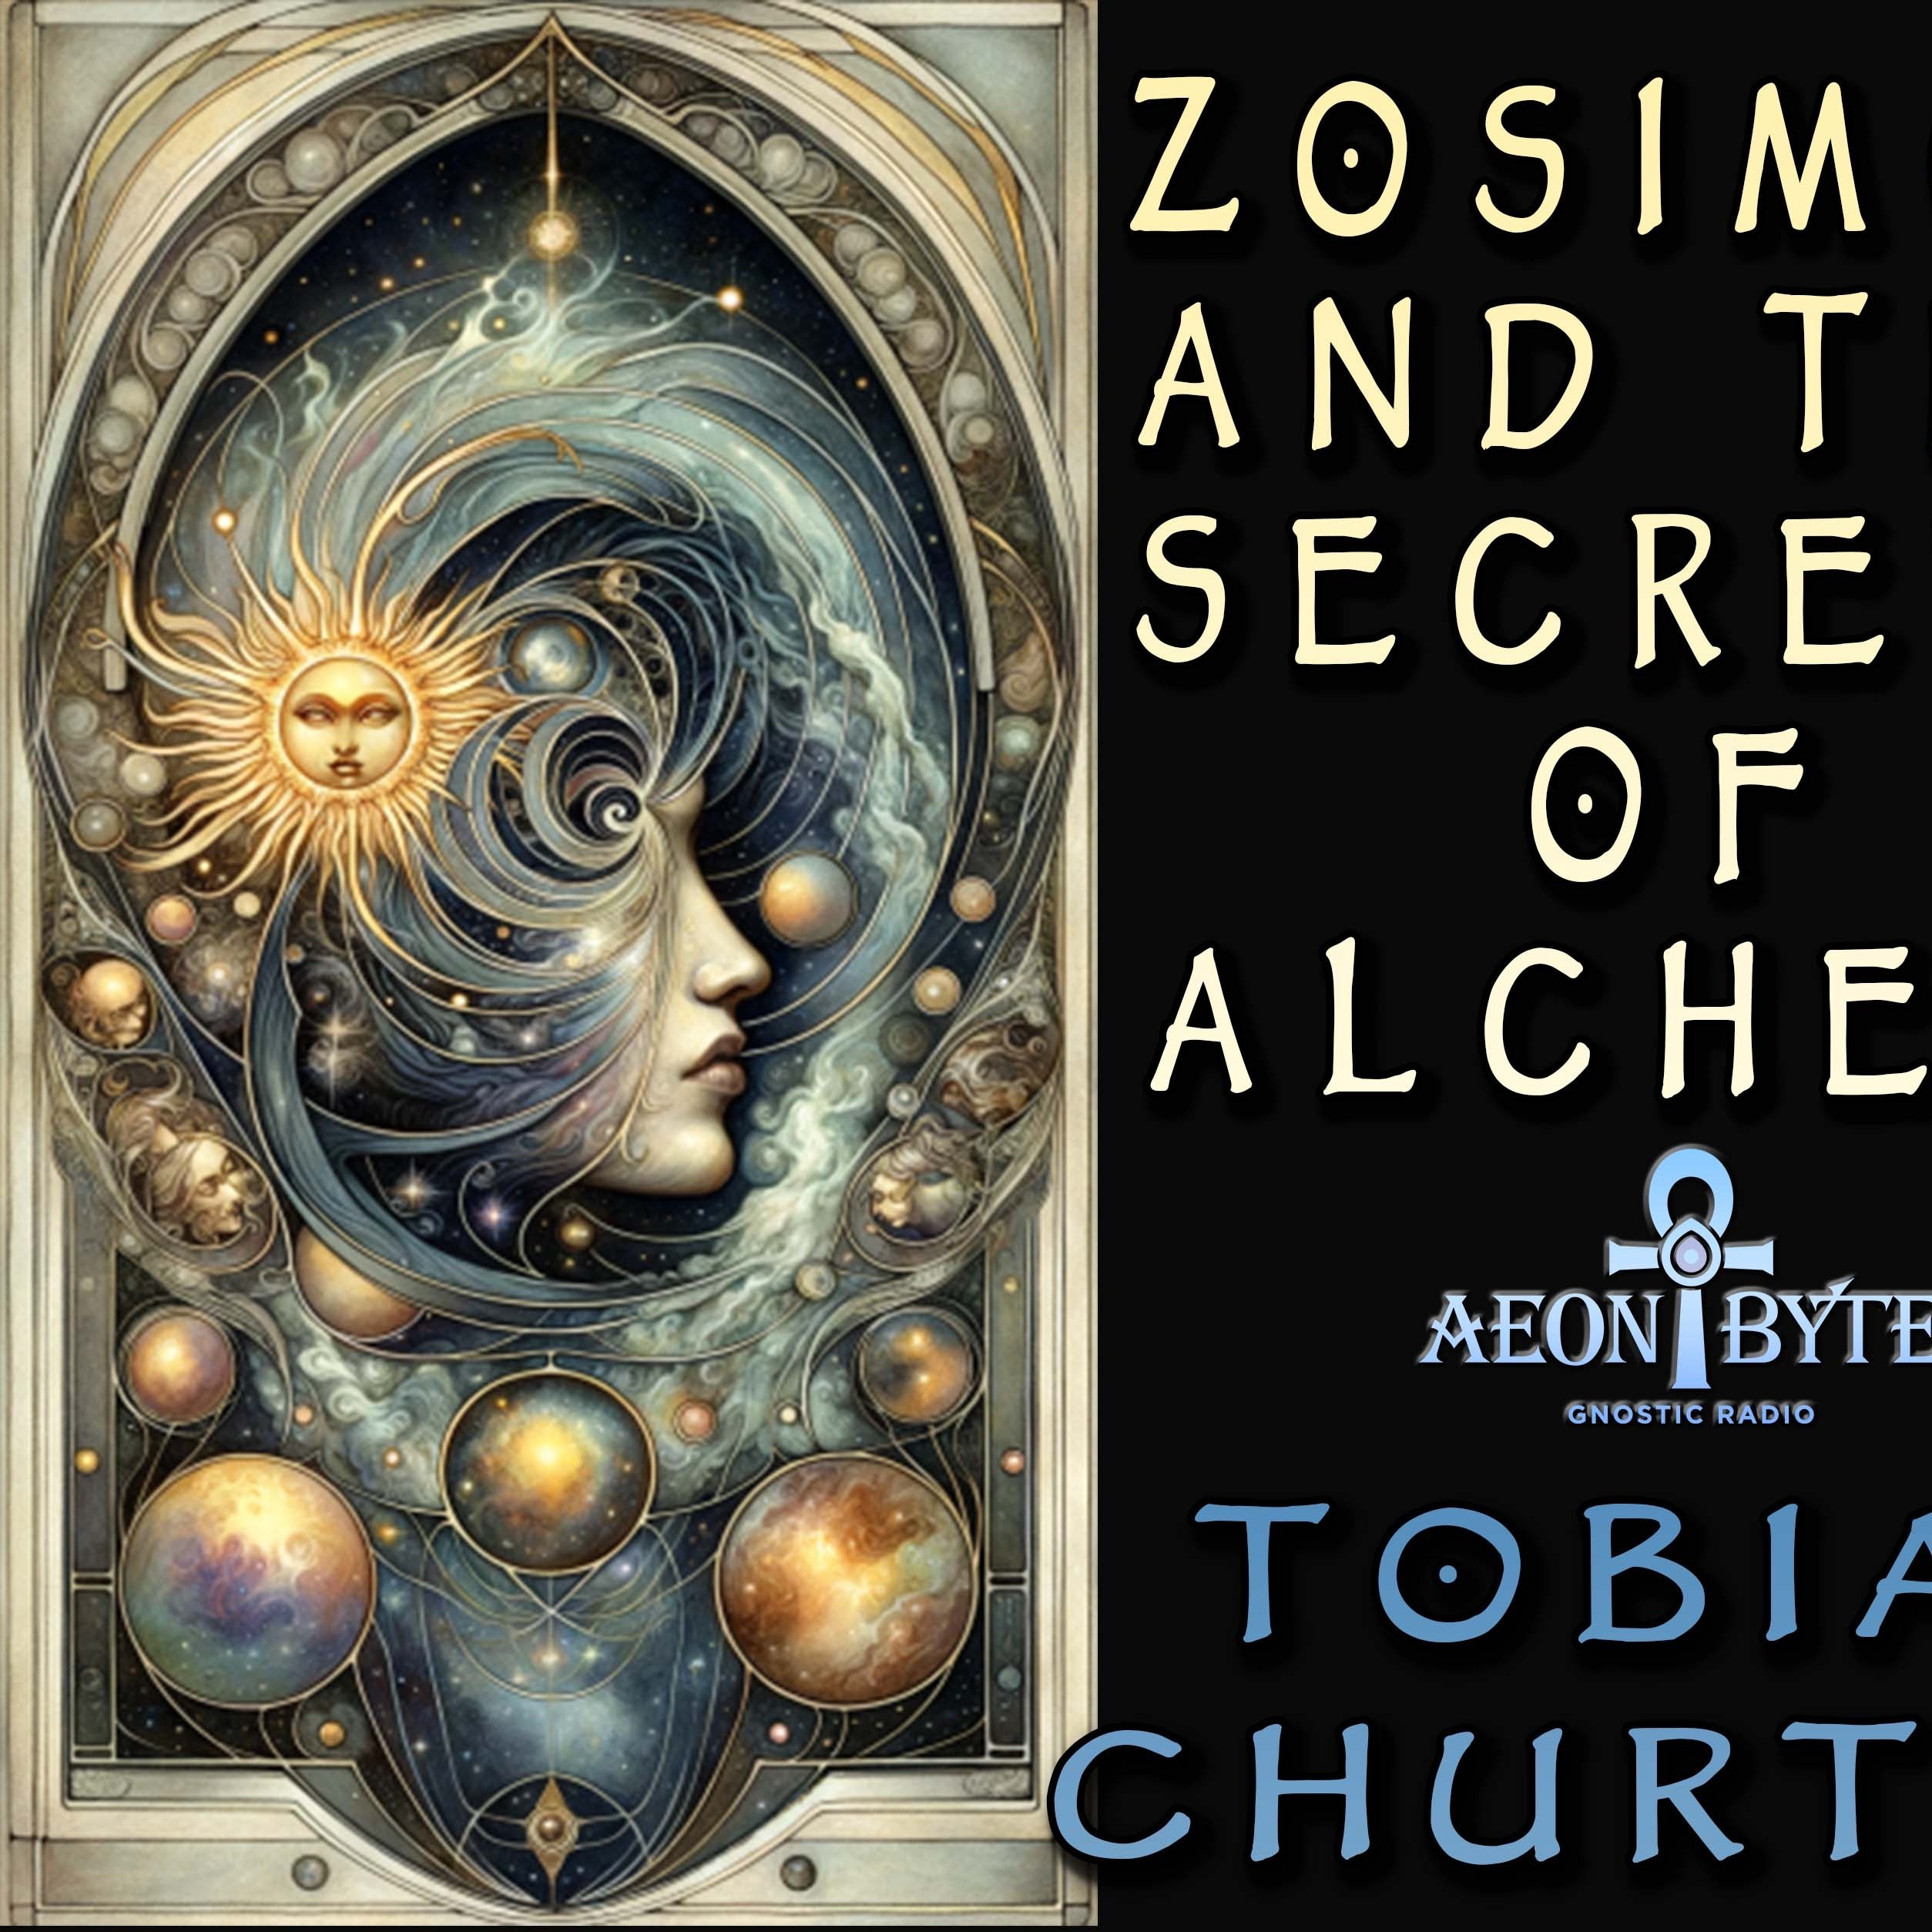 Tobias Churton on Zosimos & Secrets of Alchemy